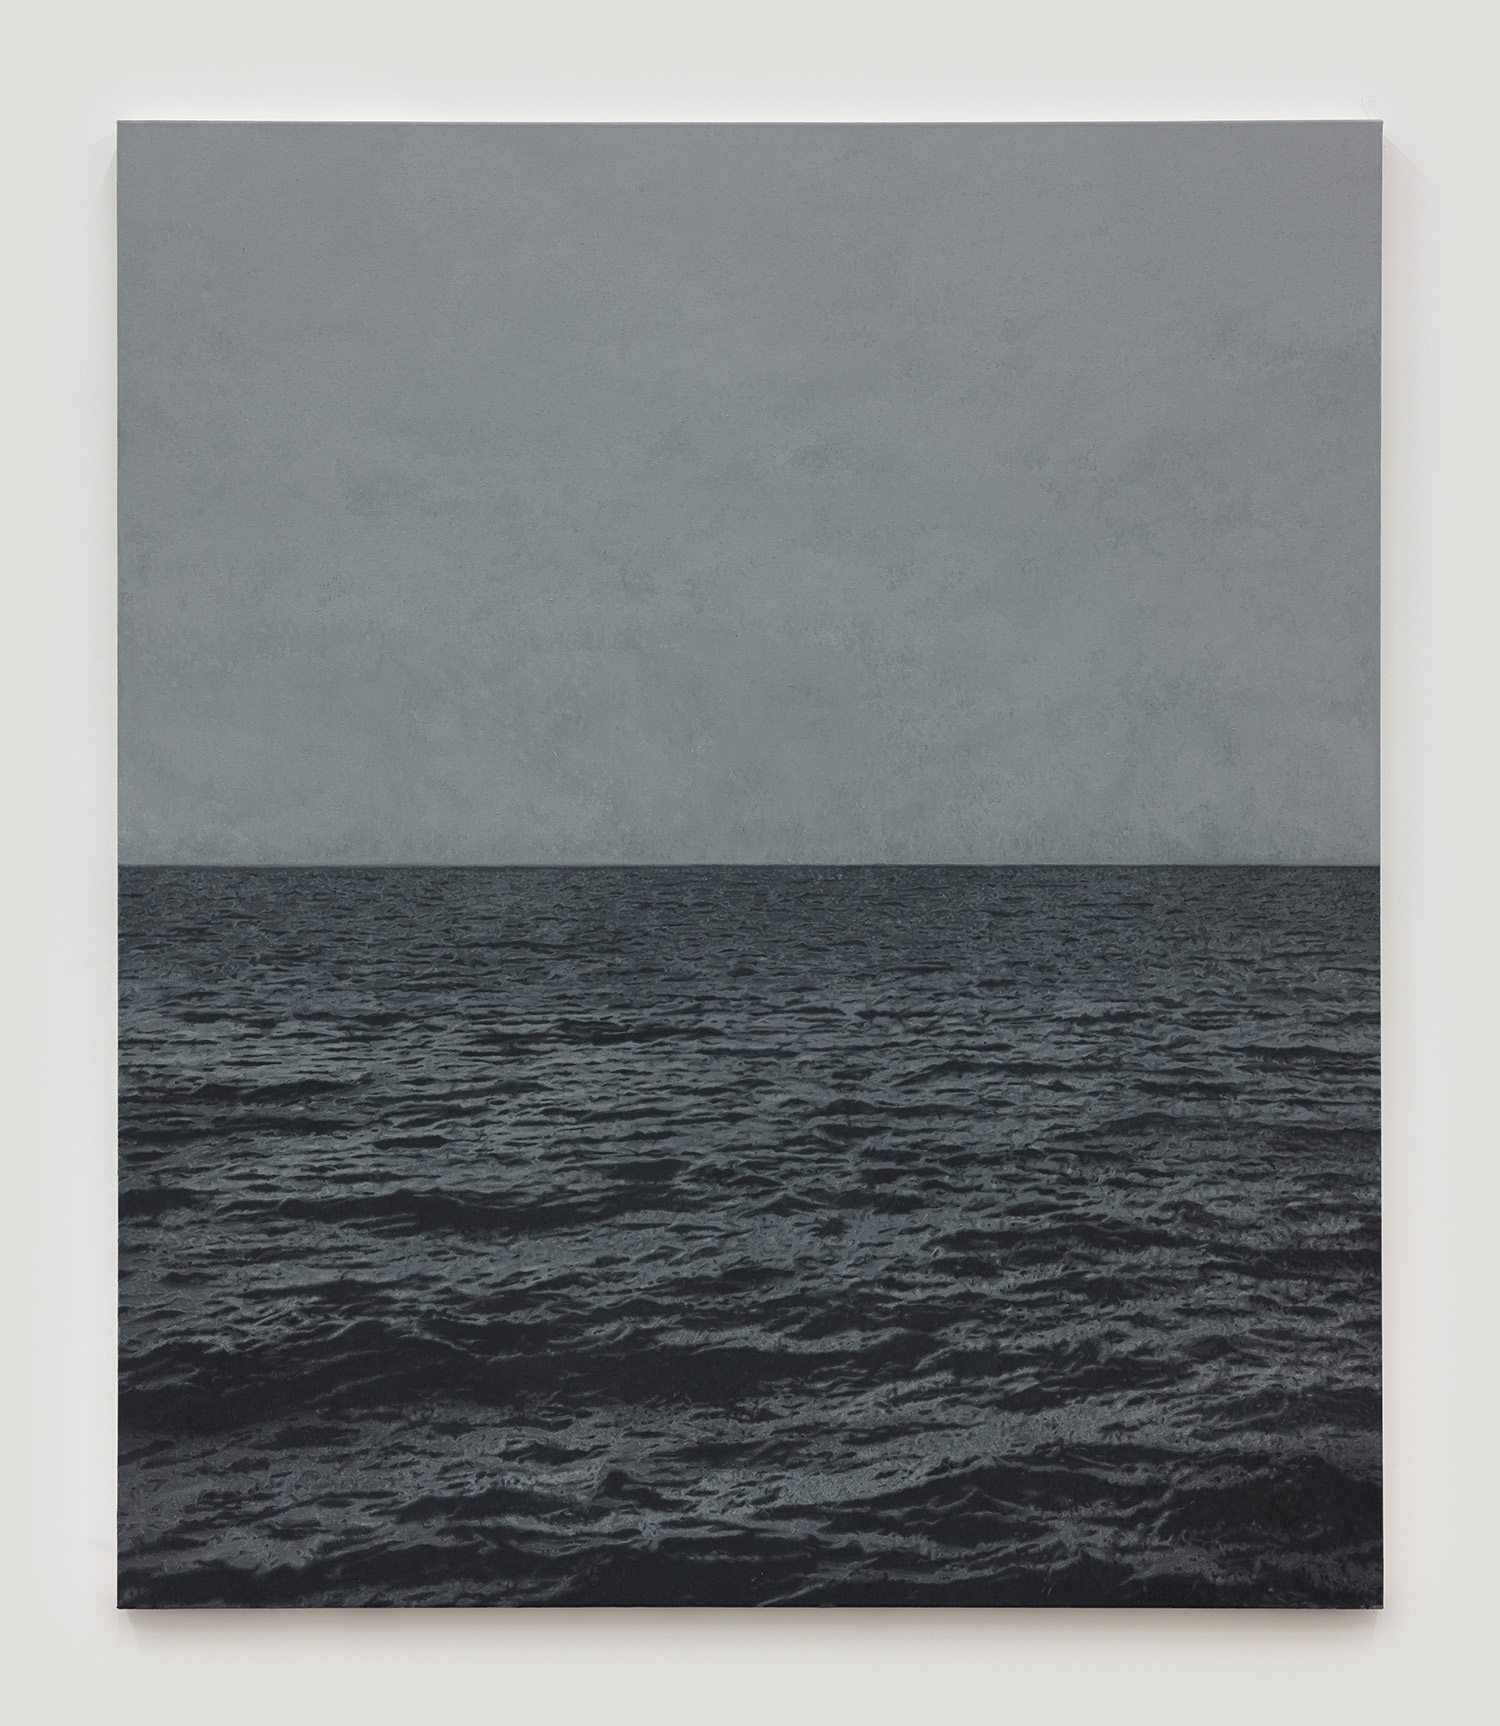 Paco König, Untitled, 2022, oil on canvas, 200 x 170 cm, 78 3/4 x 66 7/8 in